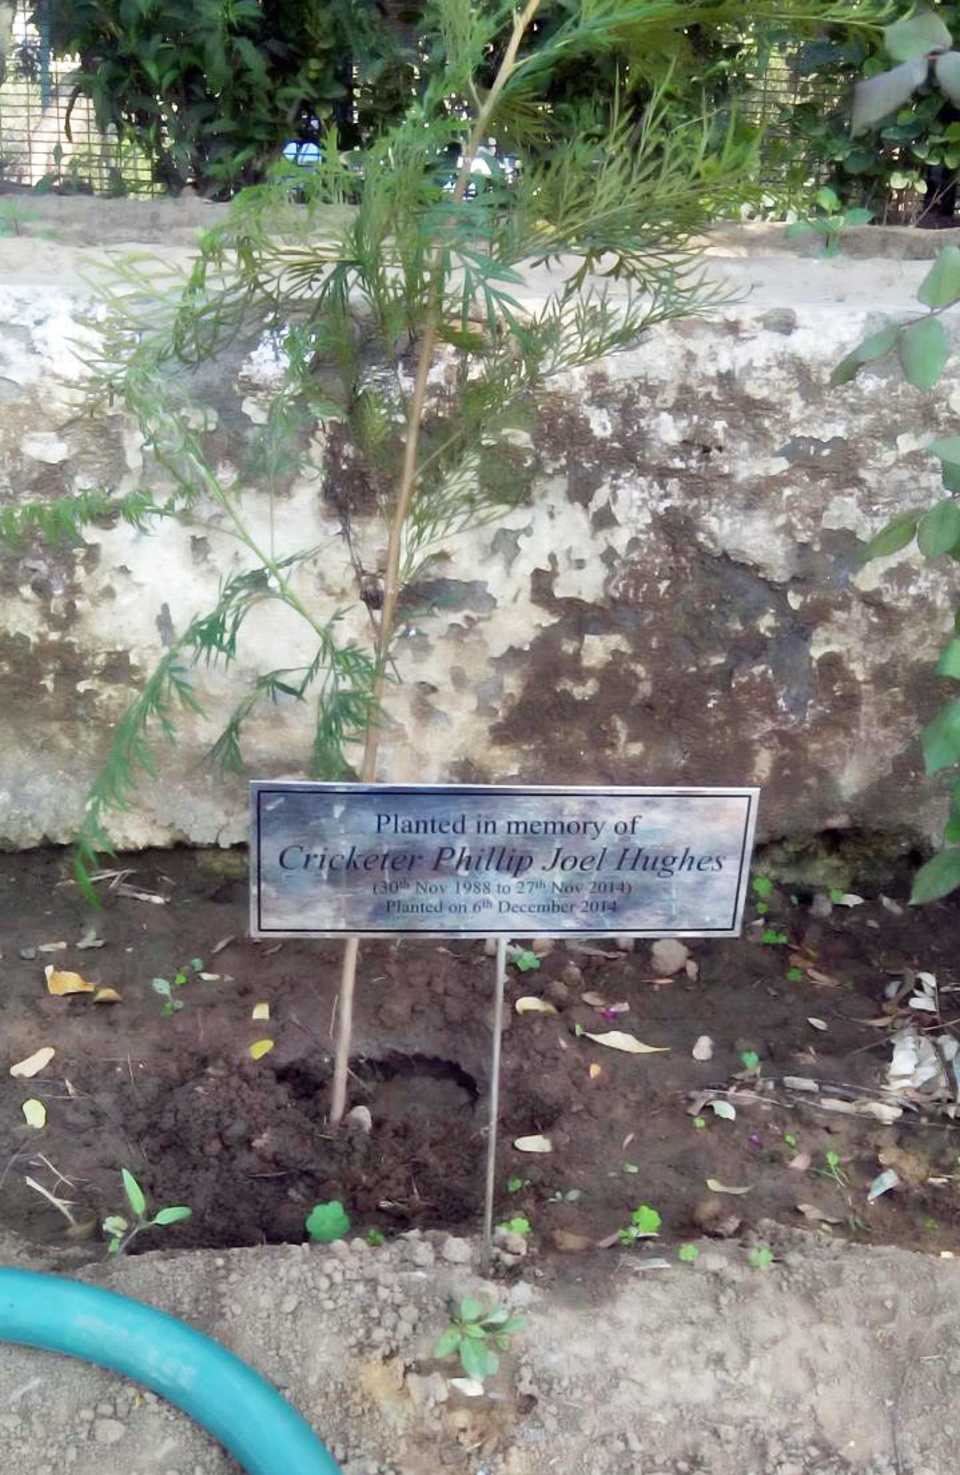 The sapling planted by Gautam Gambhir in memory of Phillip Hughes